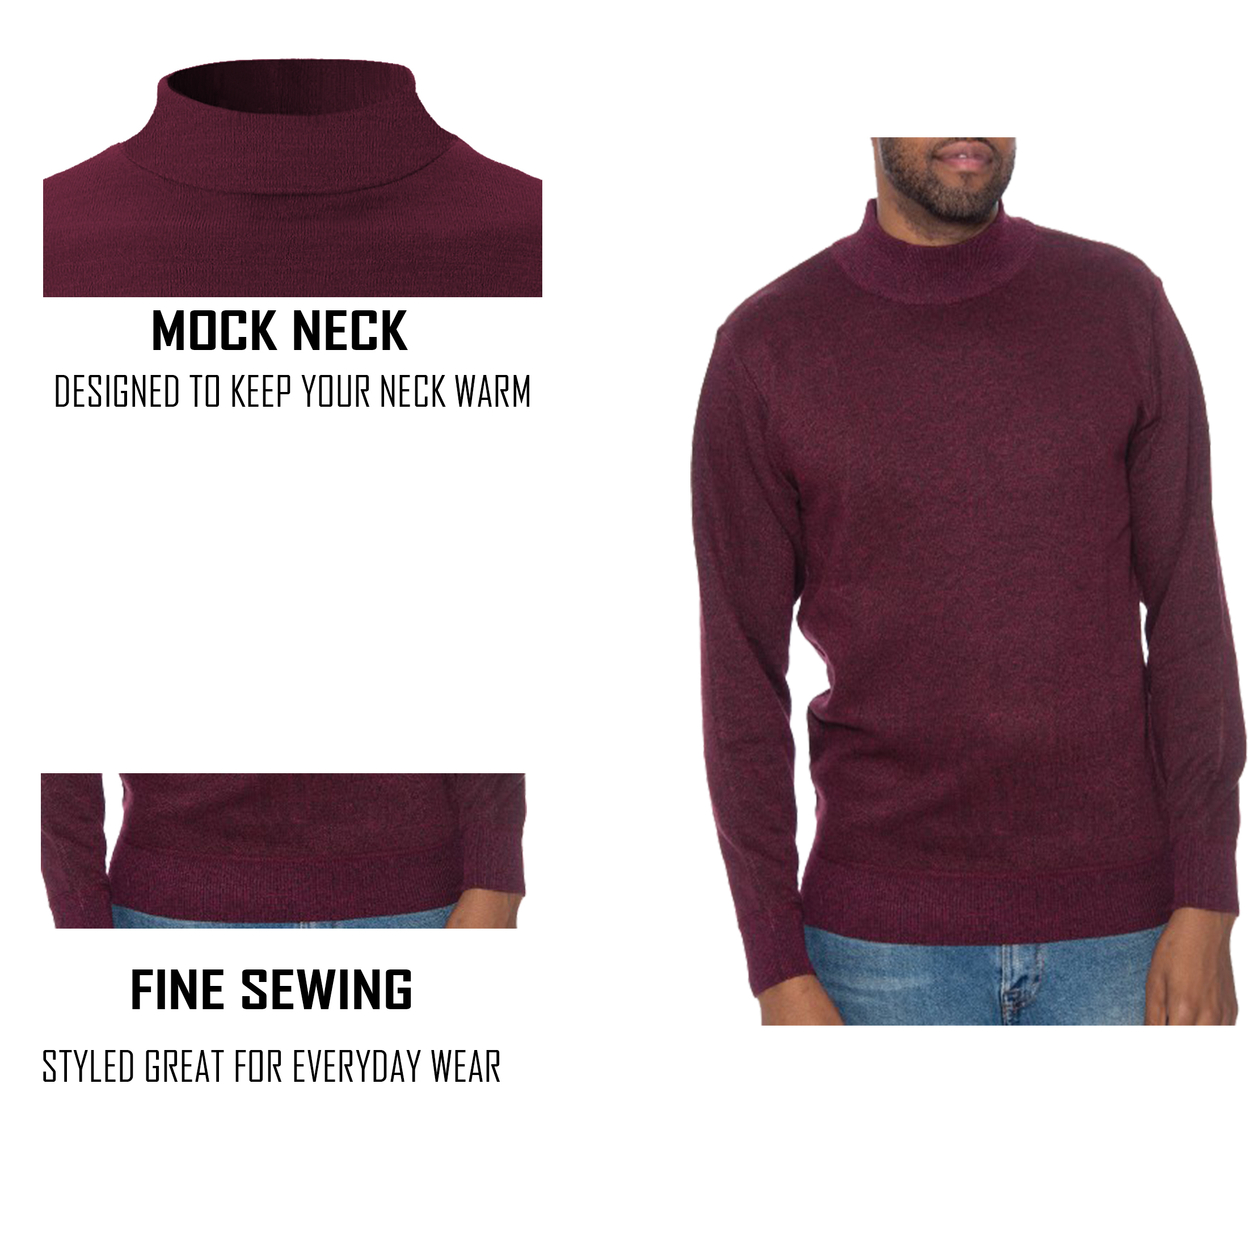 2-Pack: Men's Winter Warm Cozy Knit Slim Fit Mock Neck Sweater - Black & Black, X-large